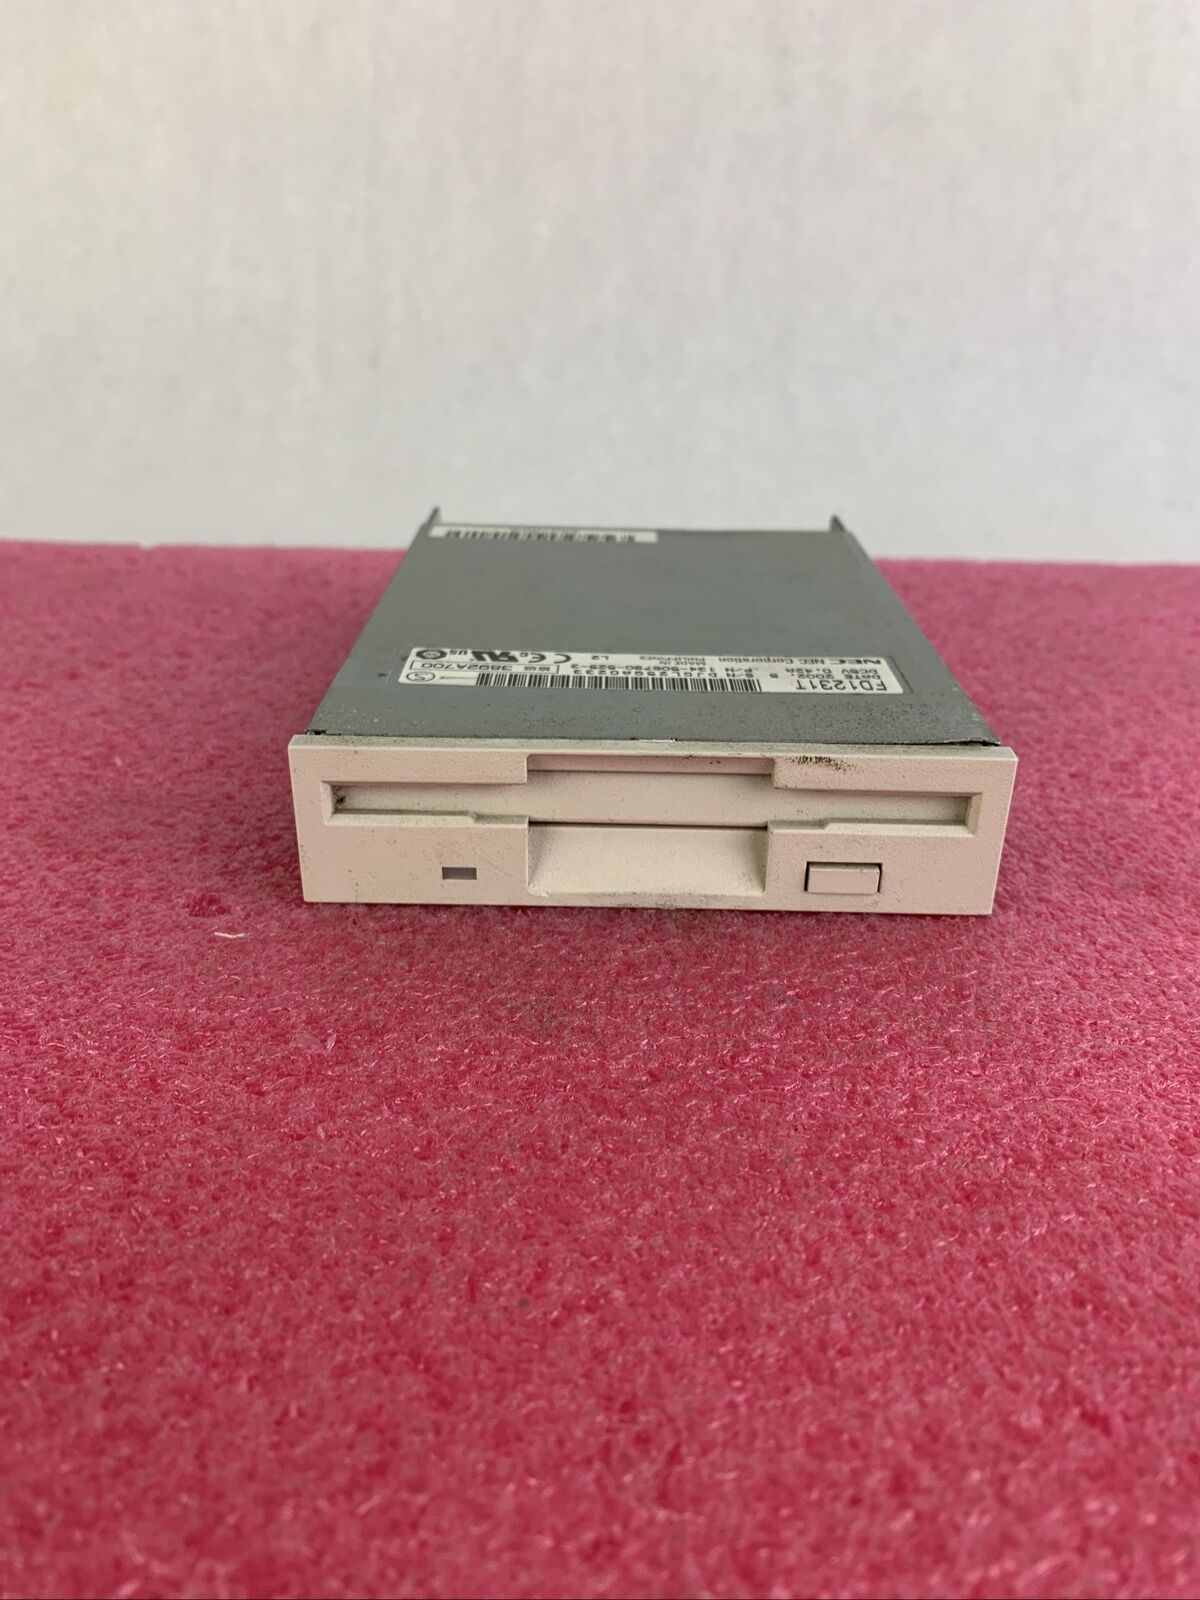 Vintage NEC FD1231T 1.44 MB 3.5 inch Floppy Drive